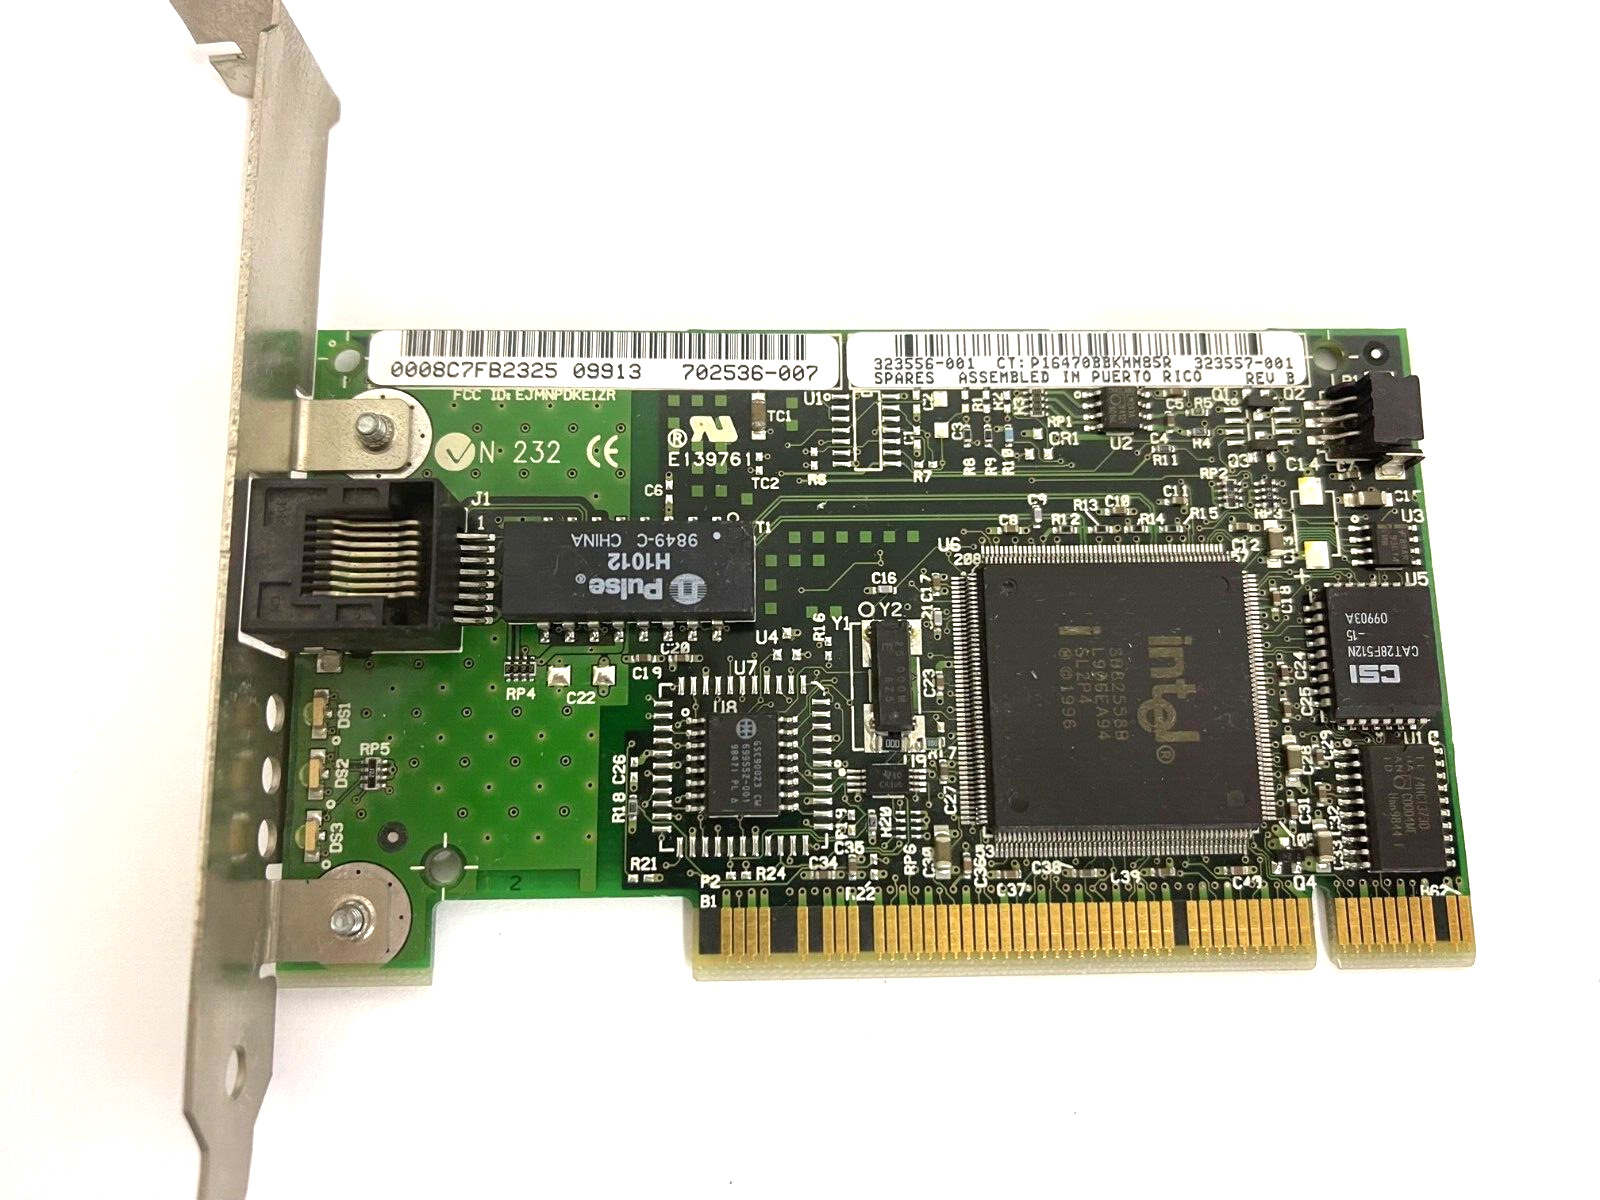 RARE VINTAGE COMPAQ NIC3121 INTEL PCI ETHERNET CARD RJ45 FCC EJMNPDKEIZR LAN16